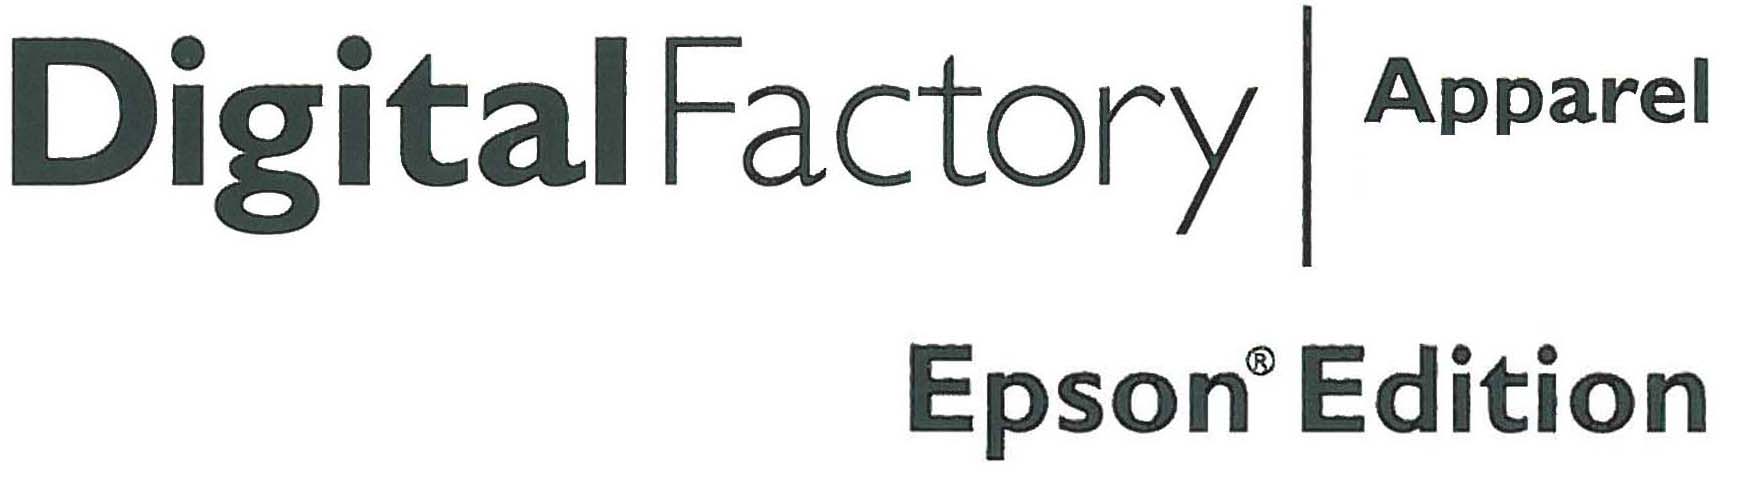 Digital Factory-Epson Edition